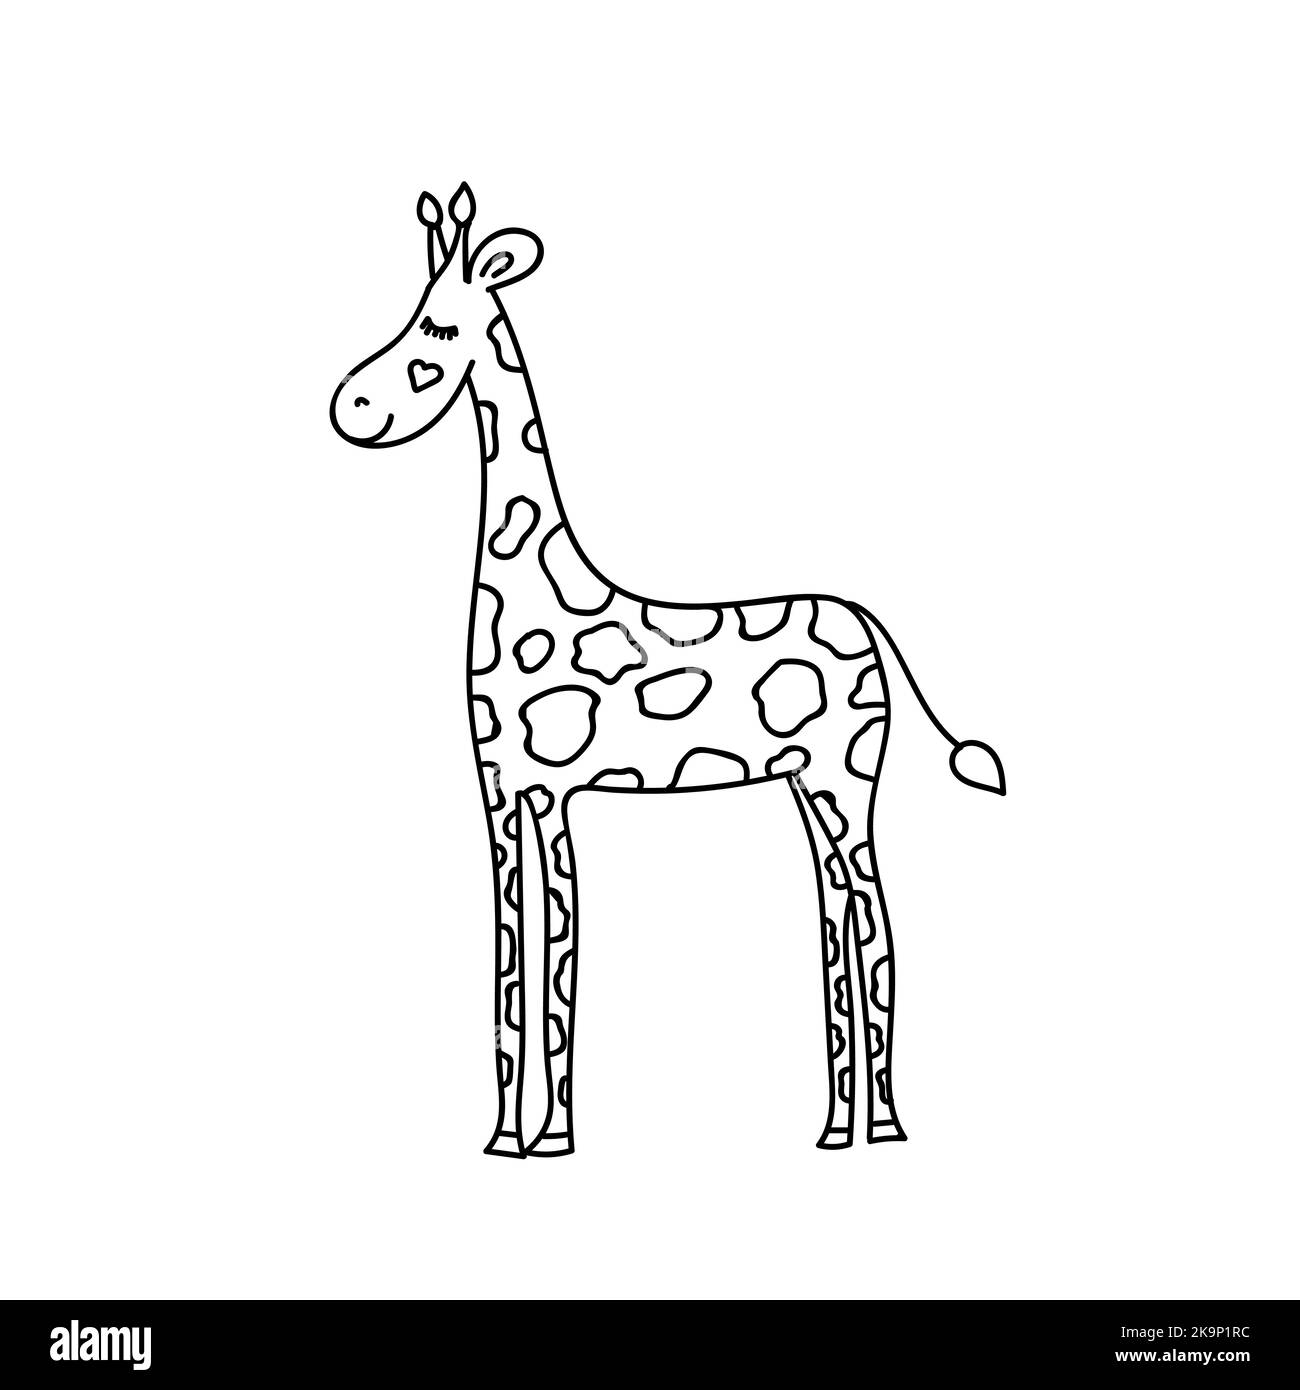 Vector illustration of funny cartoon style giraffe. Coloring book element Stock Vector